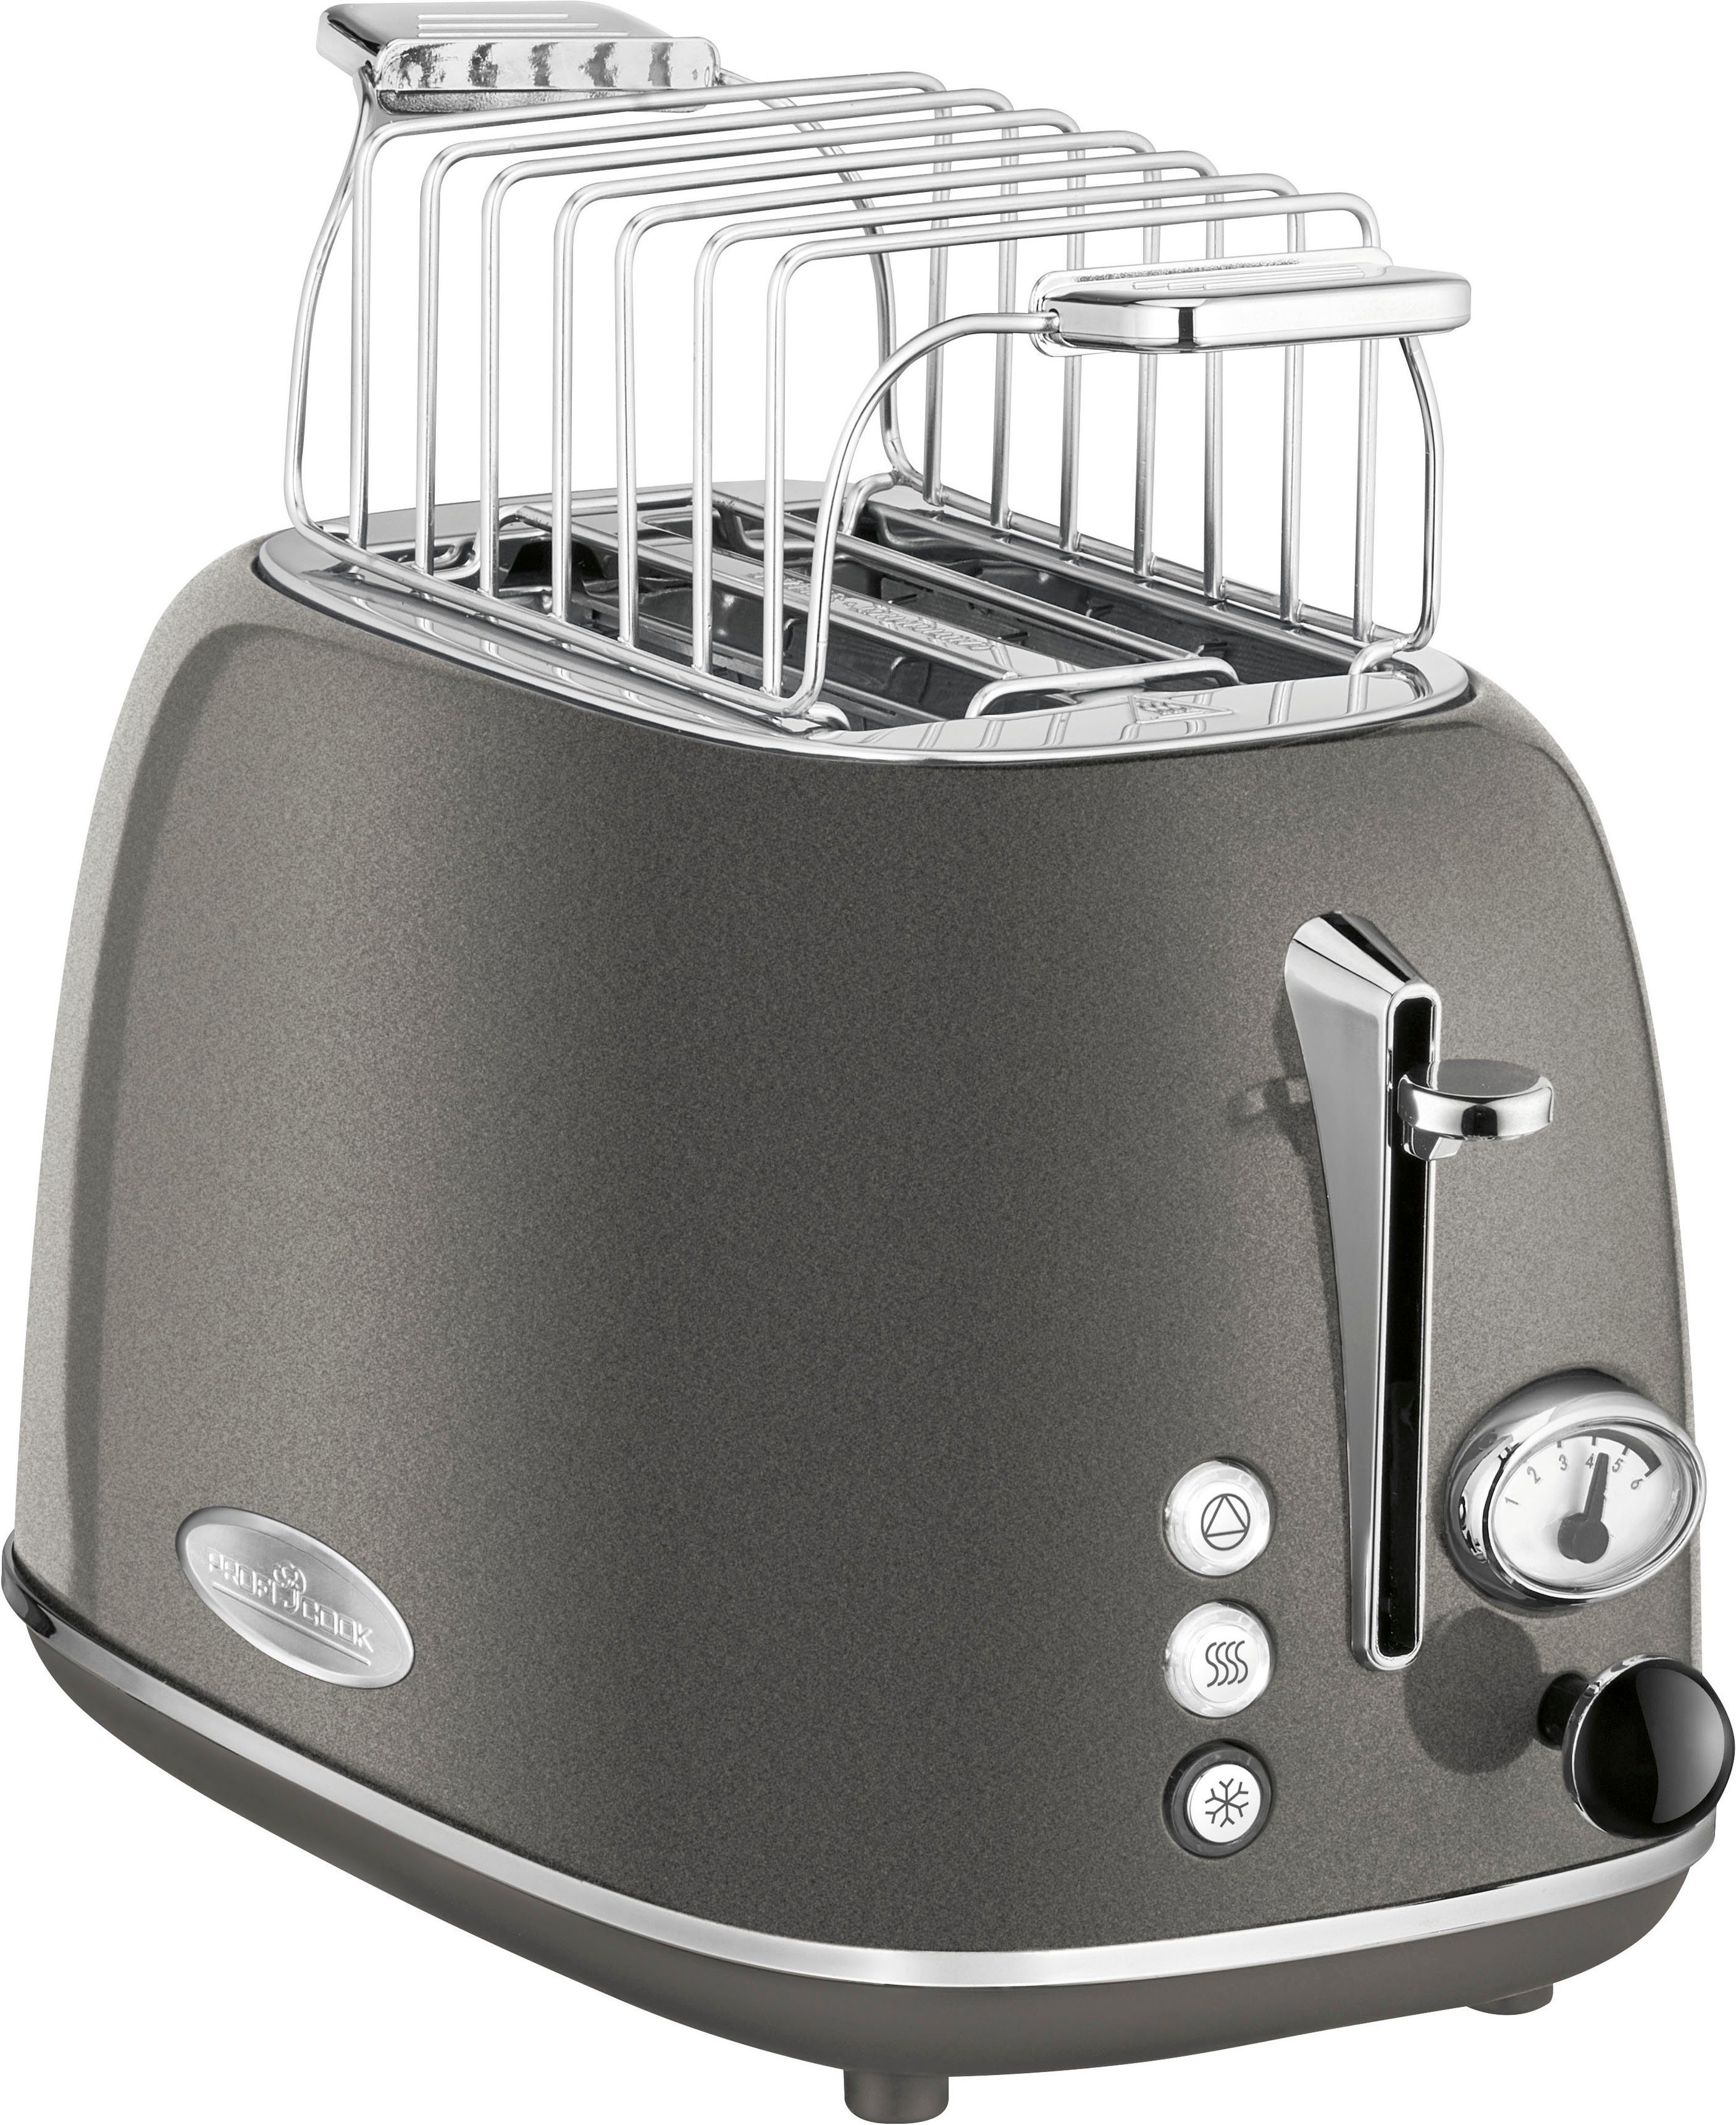 ProfiCook Toaster online kaufen | OTTO